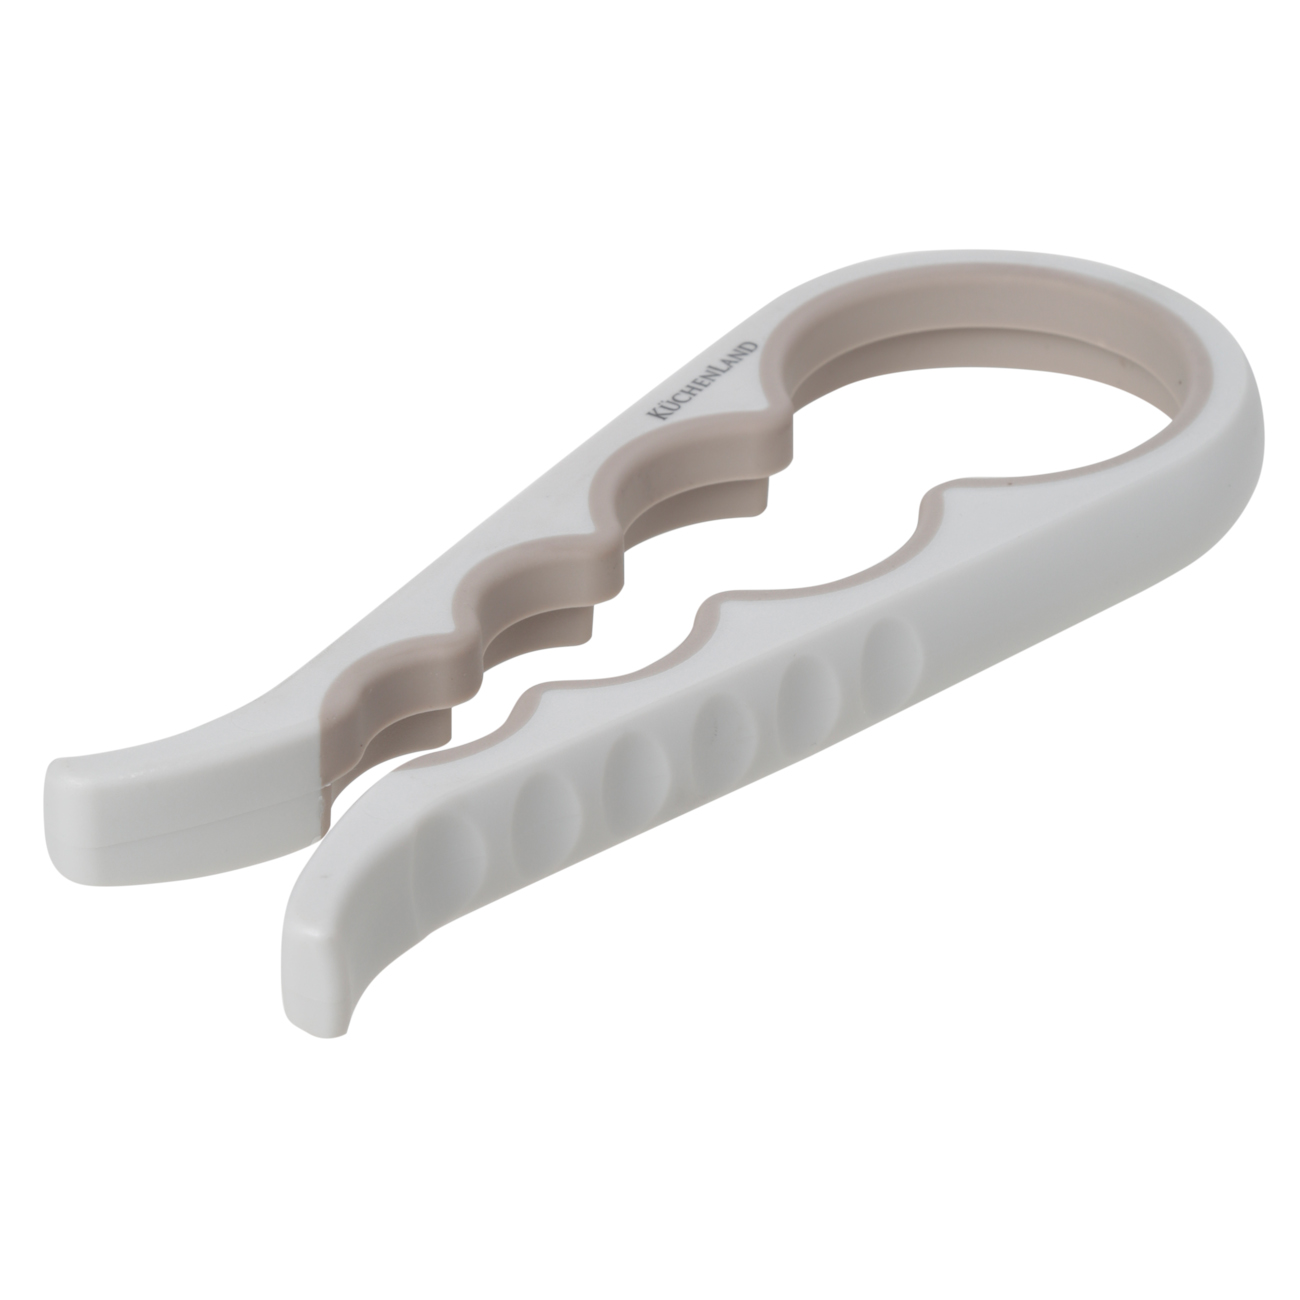 Screw cap opener, 23 cm, 4 otd, plastic, grey / beige, Assist изображение № 2